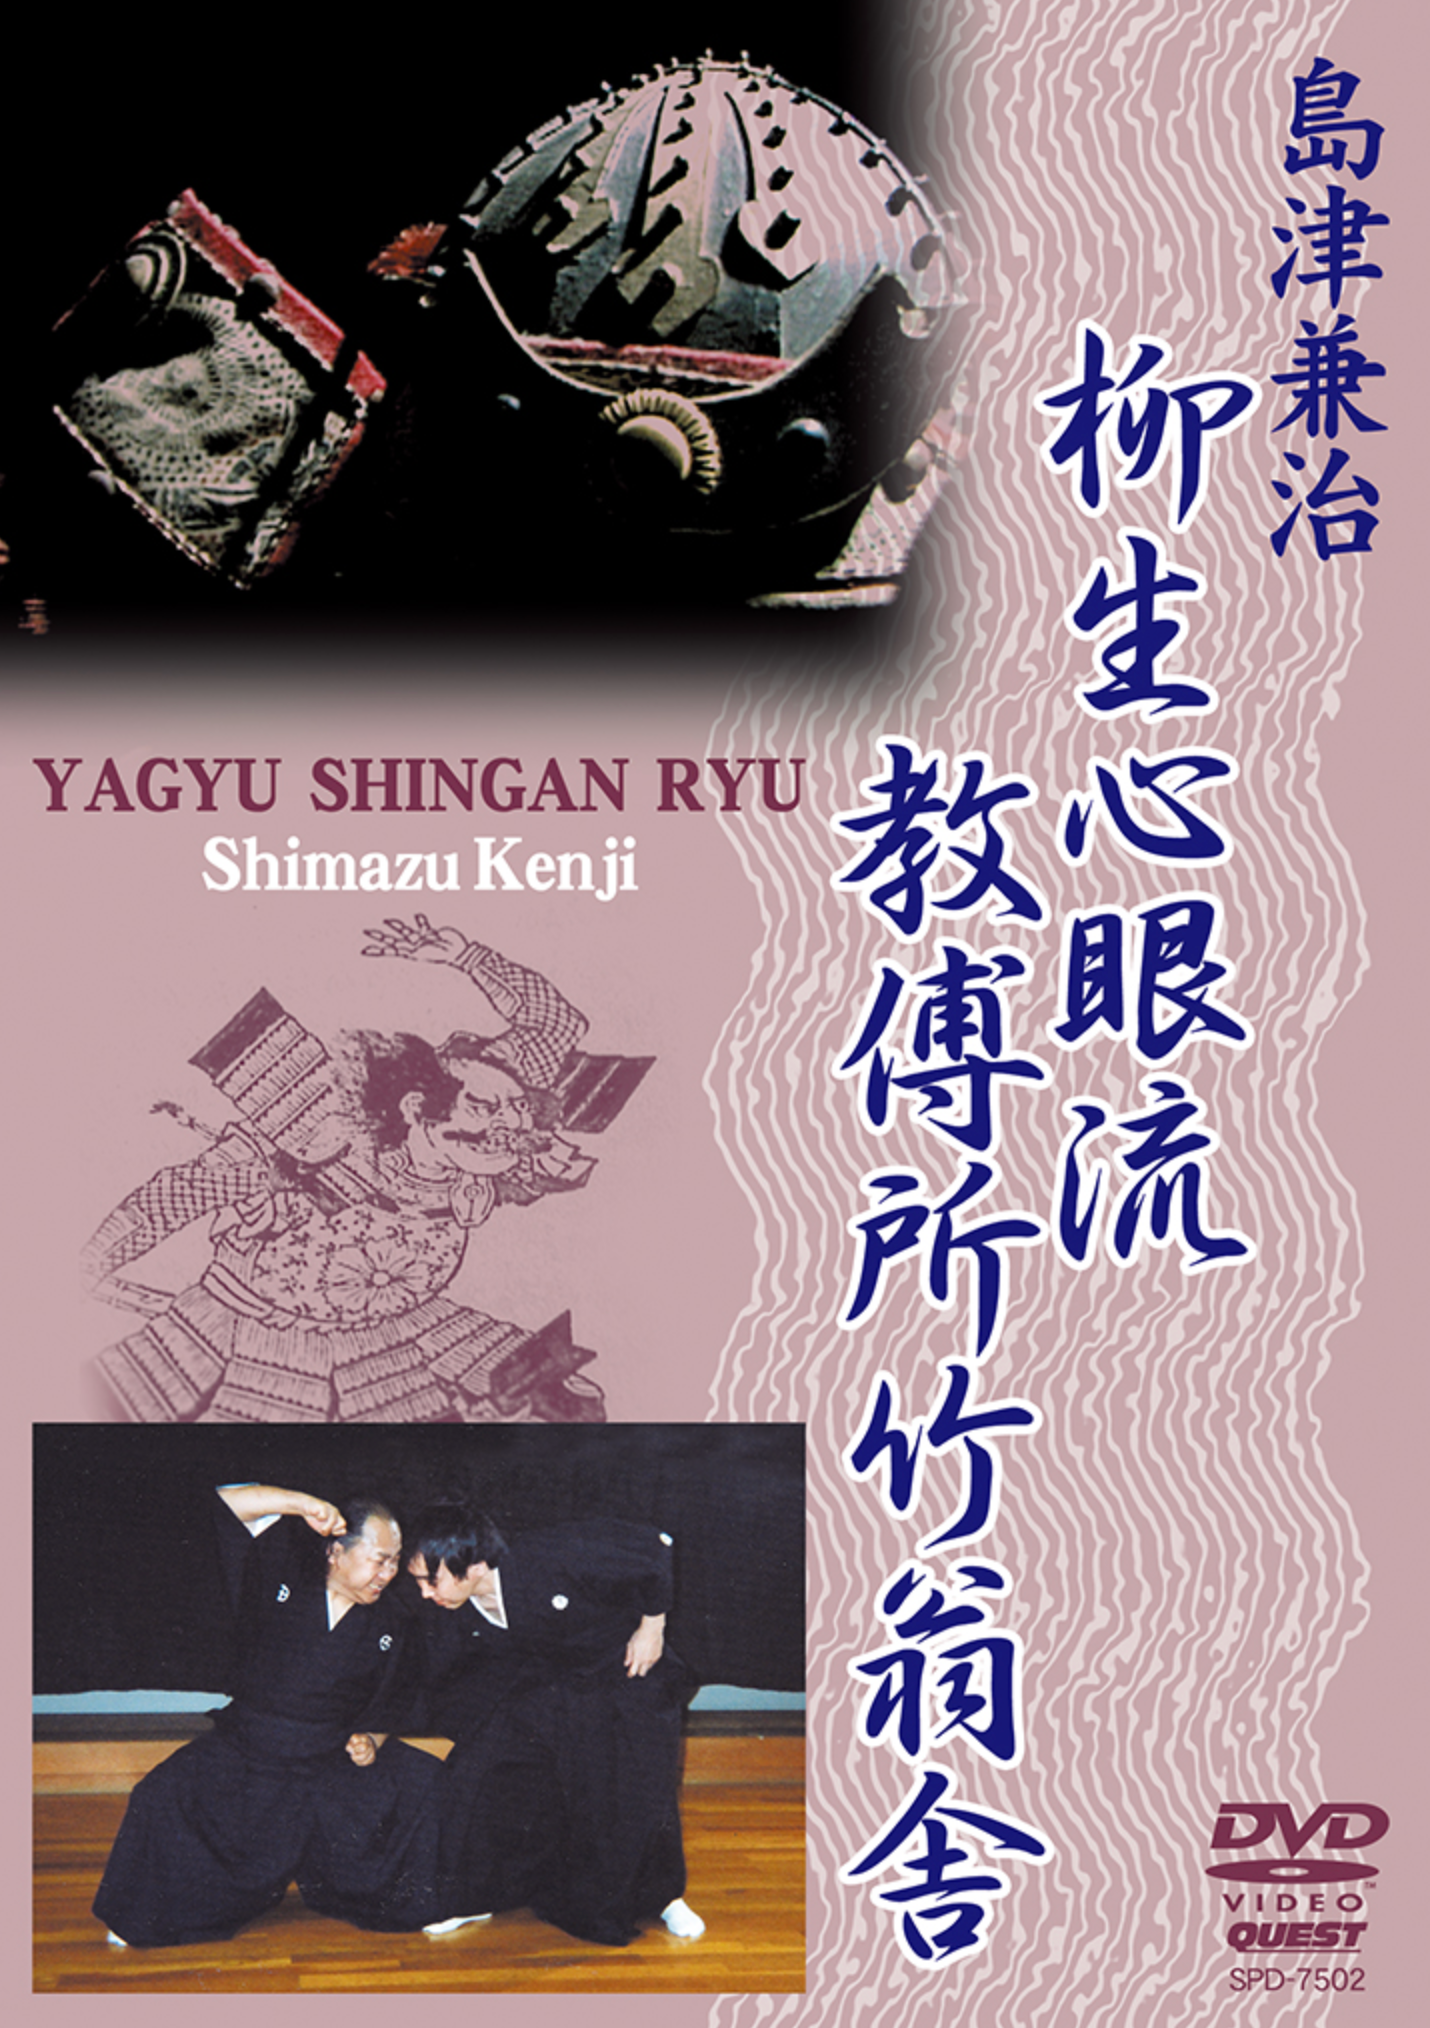 Yagyu Shingan Ryu DVD Vol 1 with Kenji Shimazu - Budovideos Inc